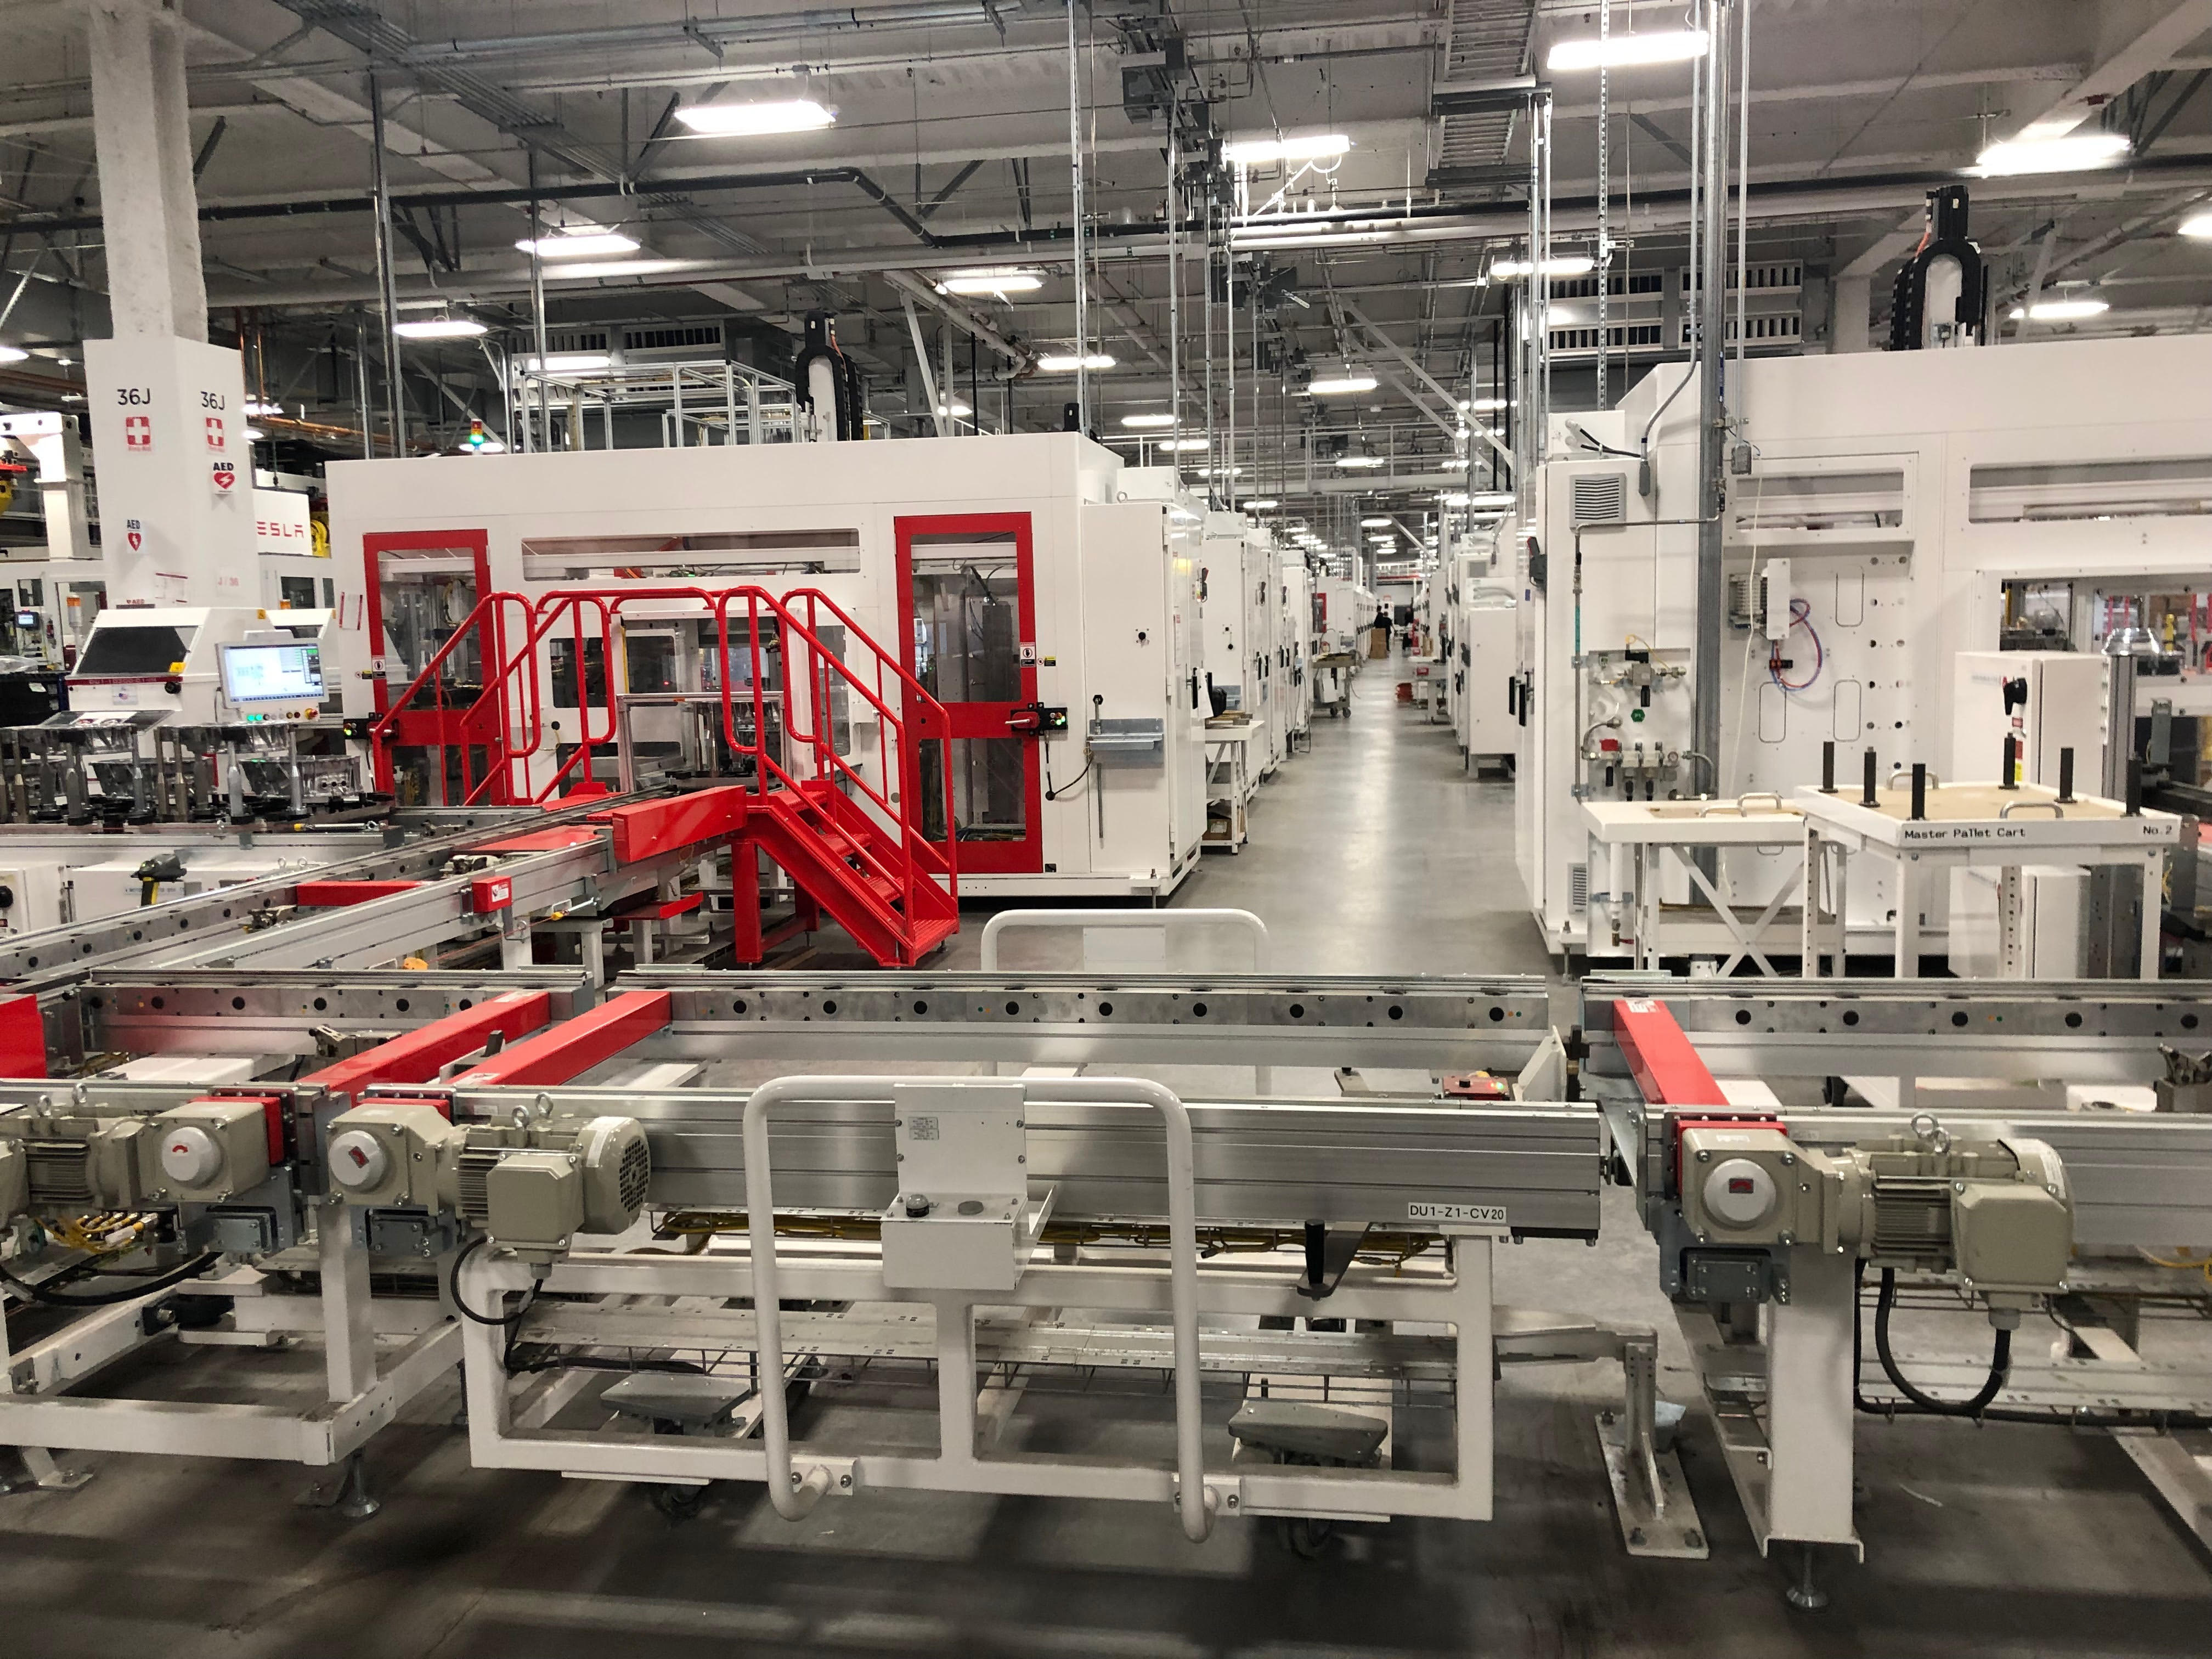 We went inside Tesla's first Gigafactory